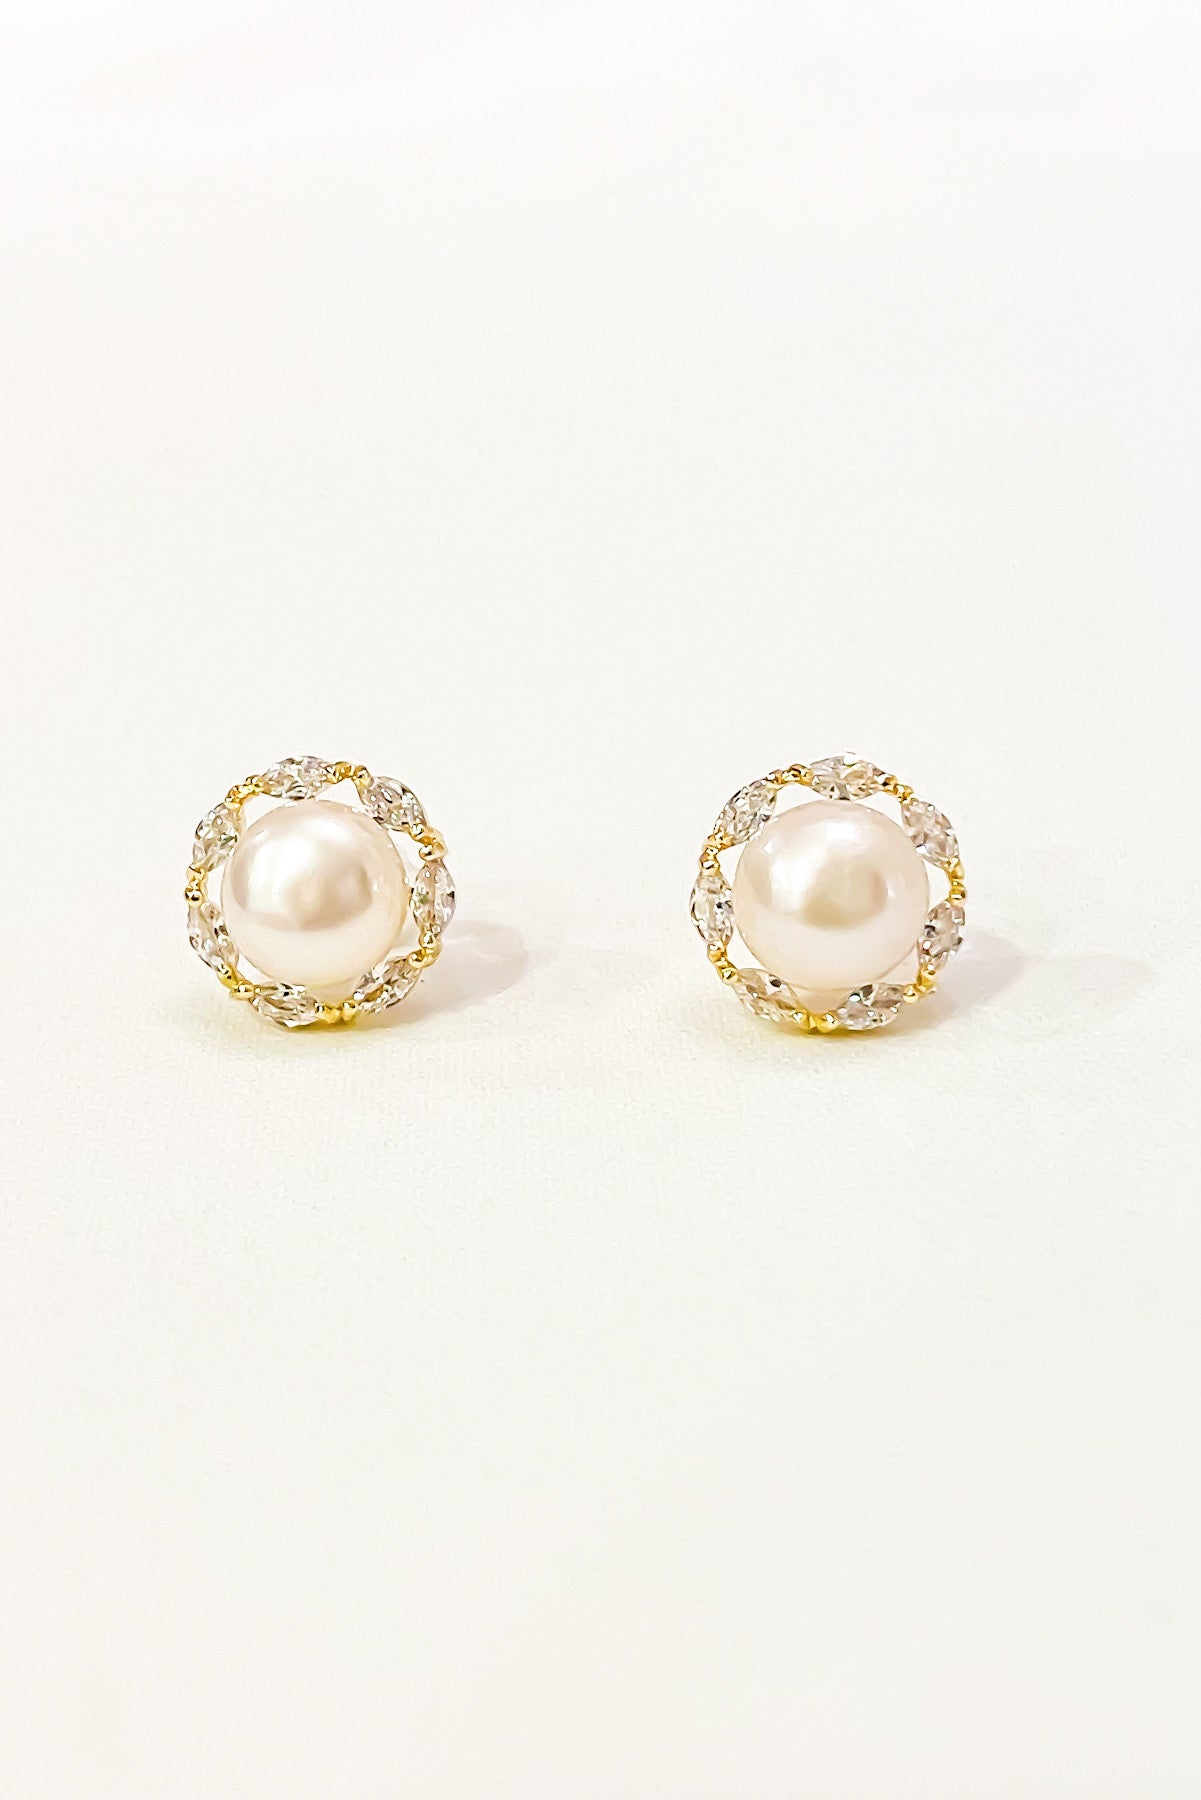 SKYE San Francisco Shop SF Chic Modern Elegant Classy Women Jewelry French Parisian Minimalist Cosette 18K Gold Pearl Earrings 2